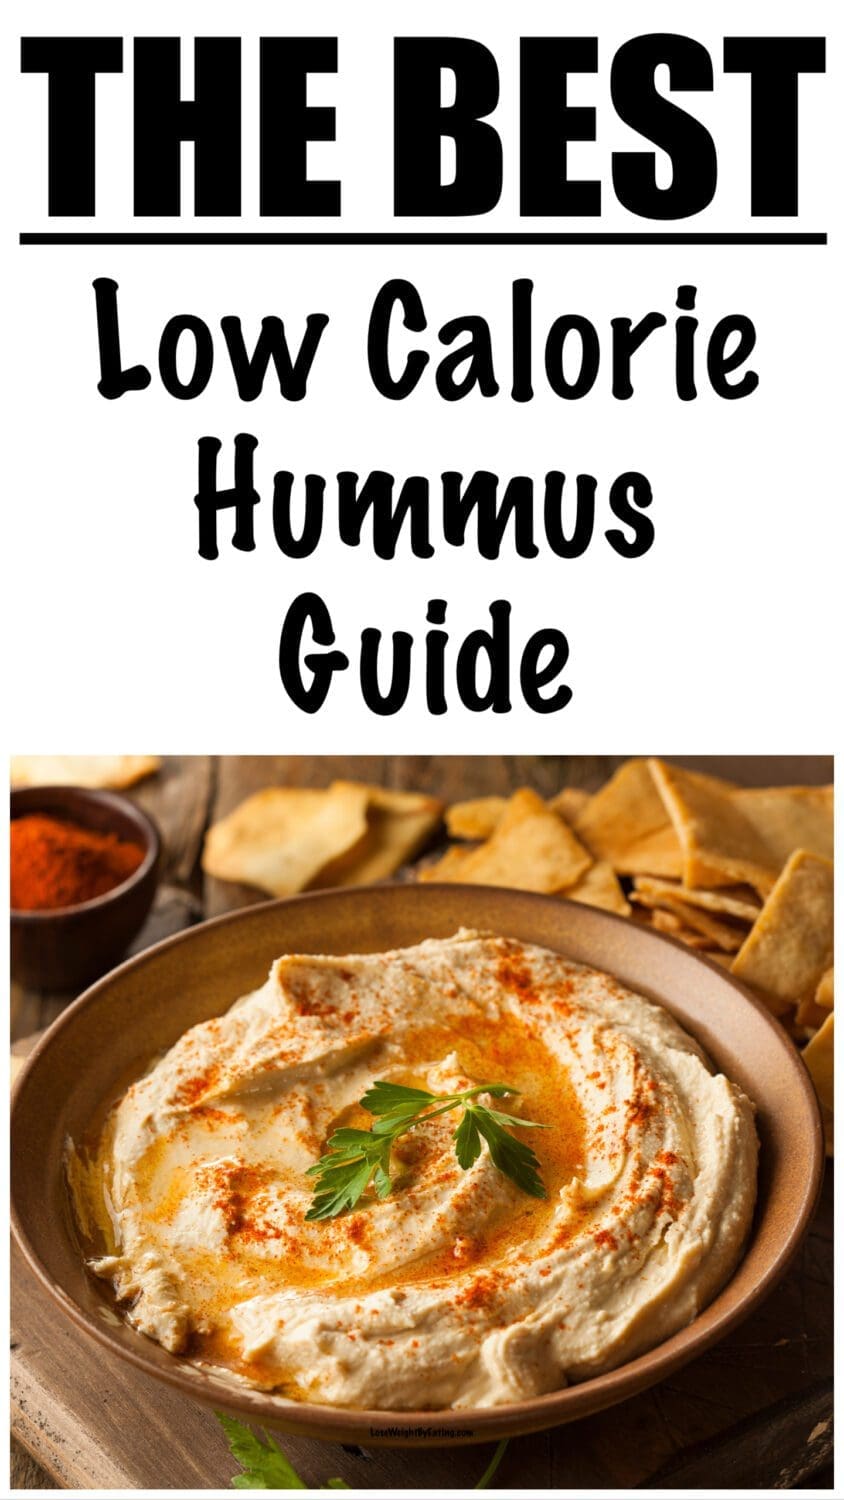 Calories in Hummus